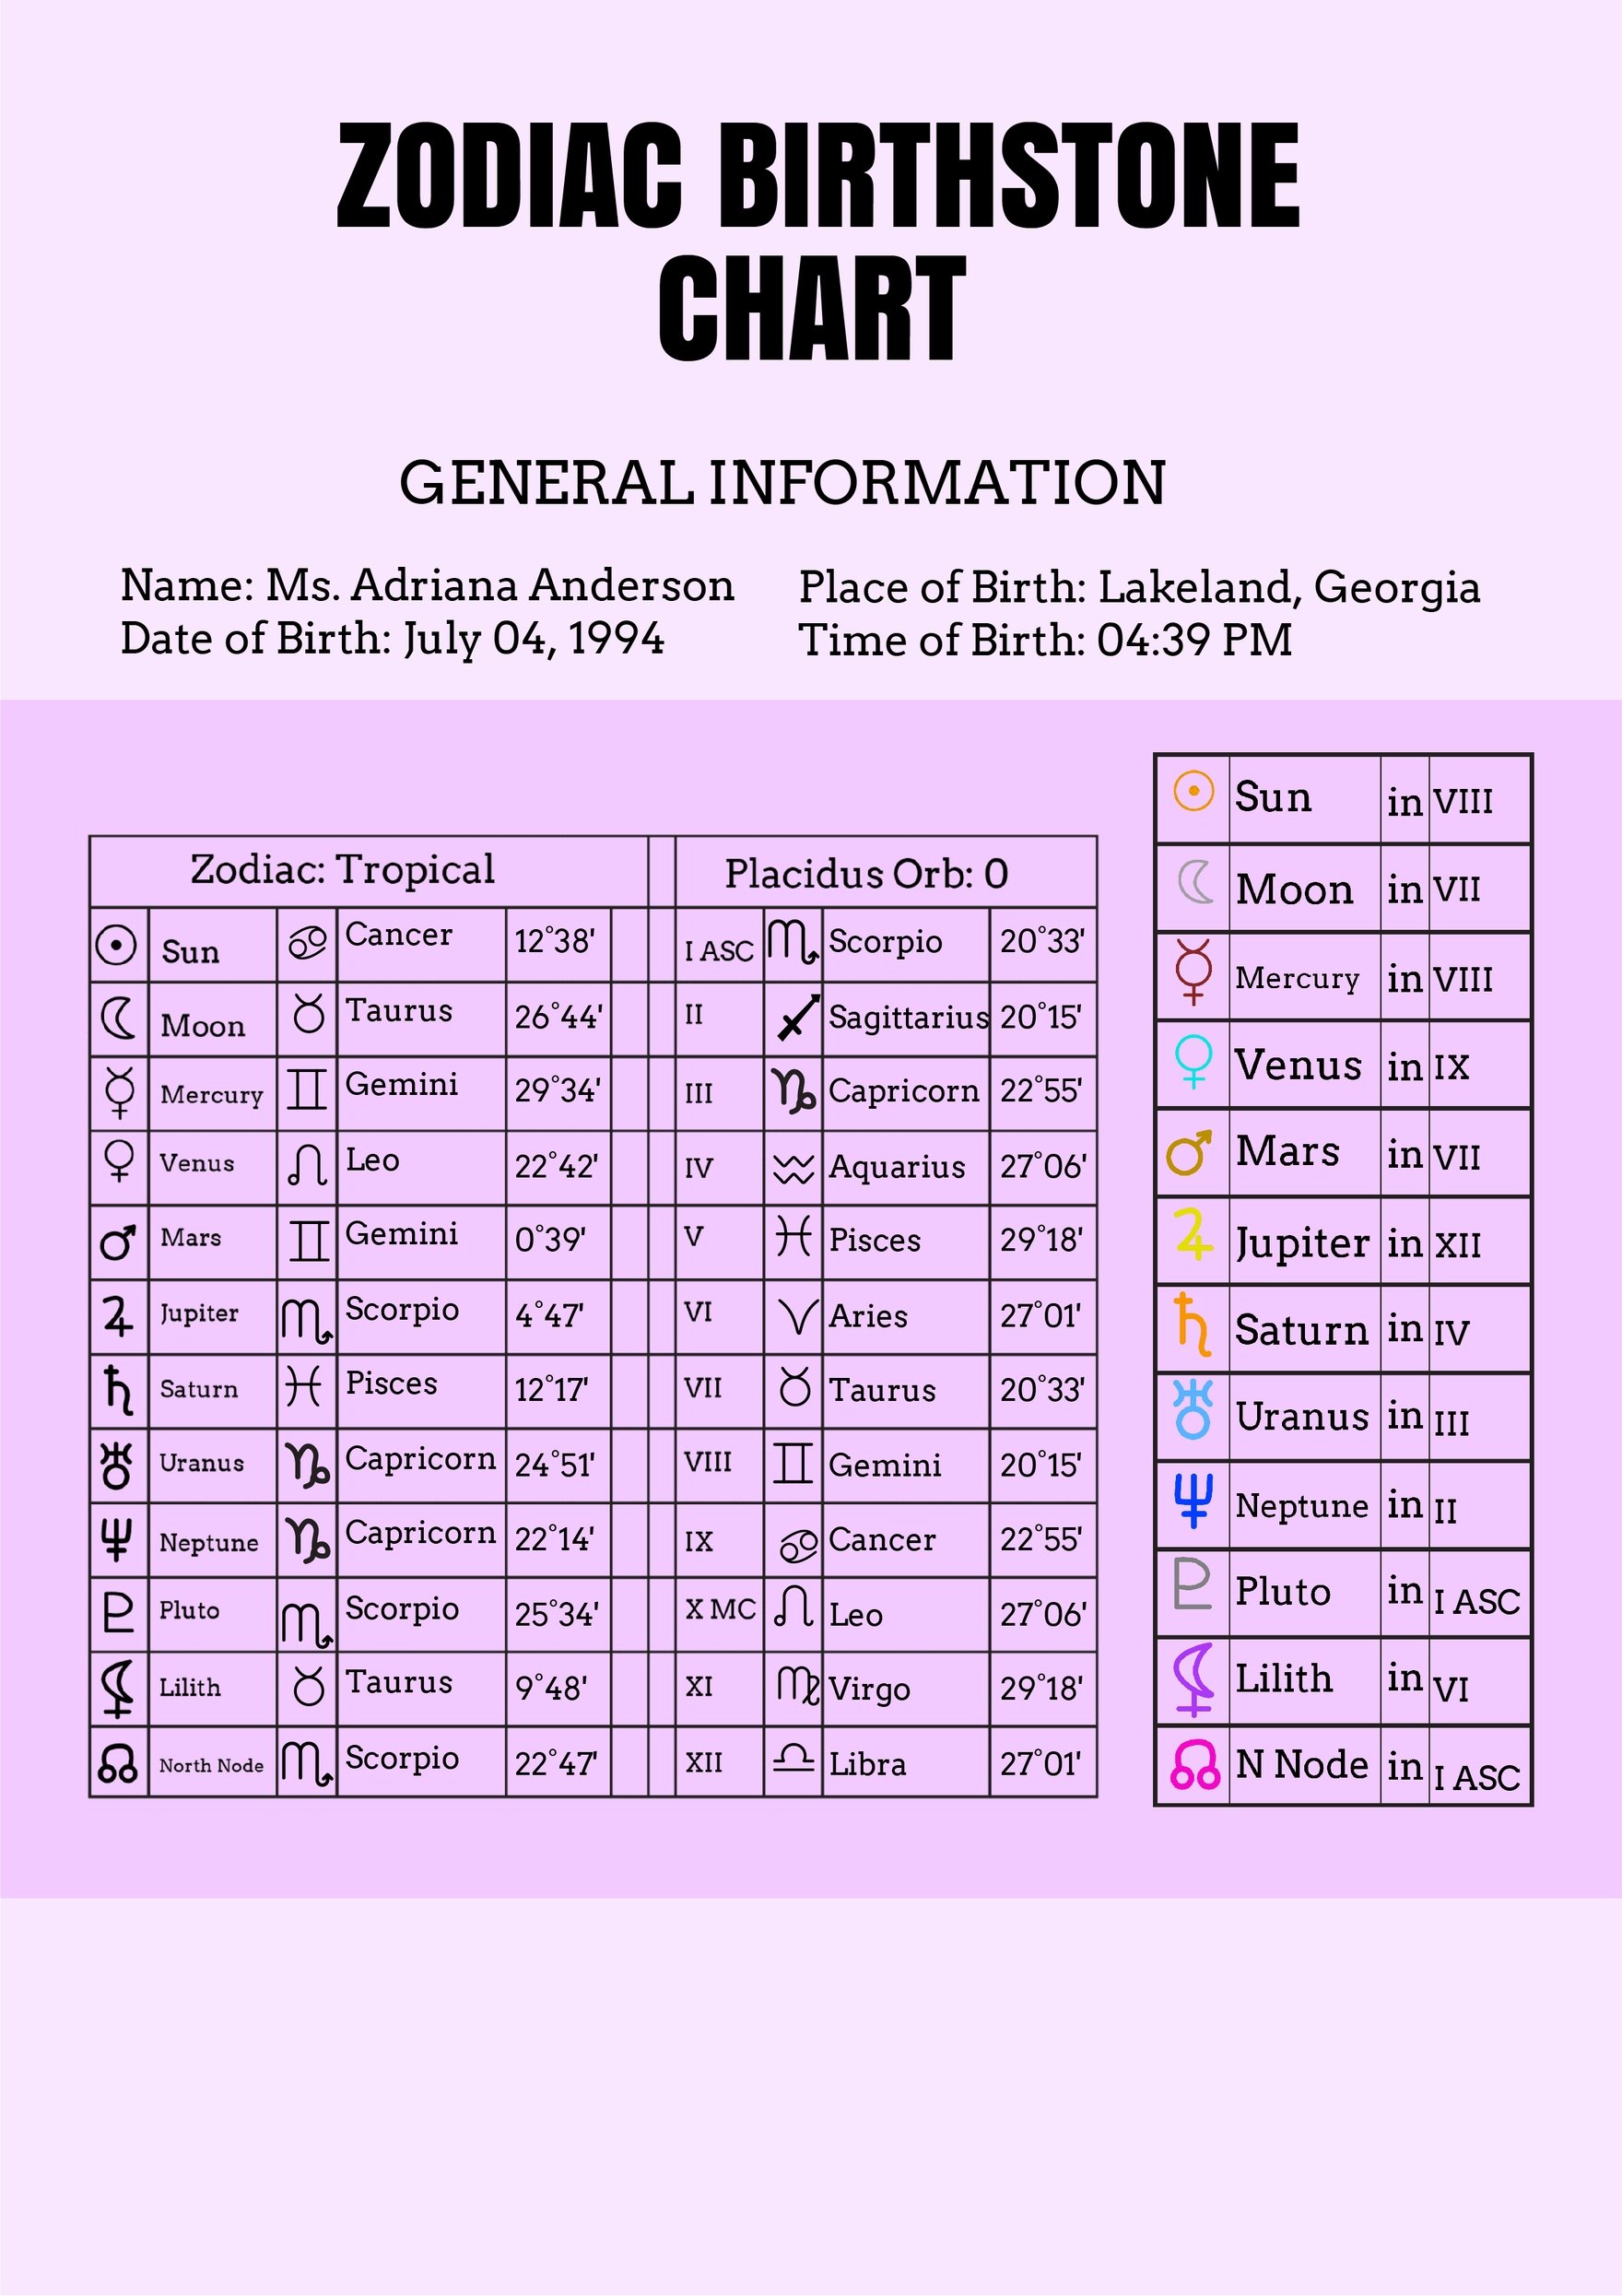 Zodiac Birthstone Chart Template in Illustrator, PDF - Download ...